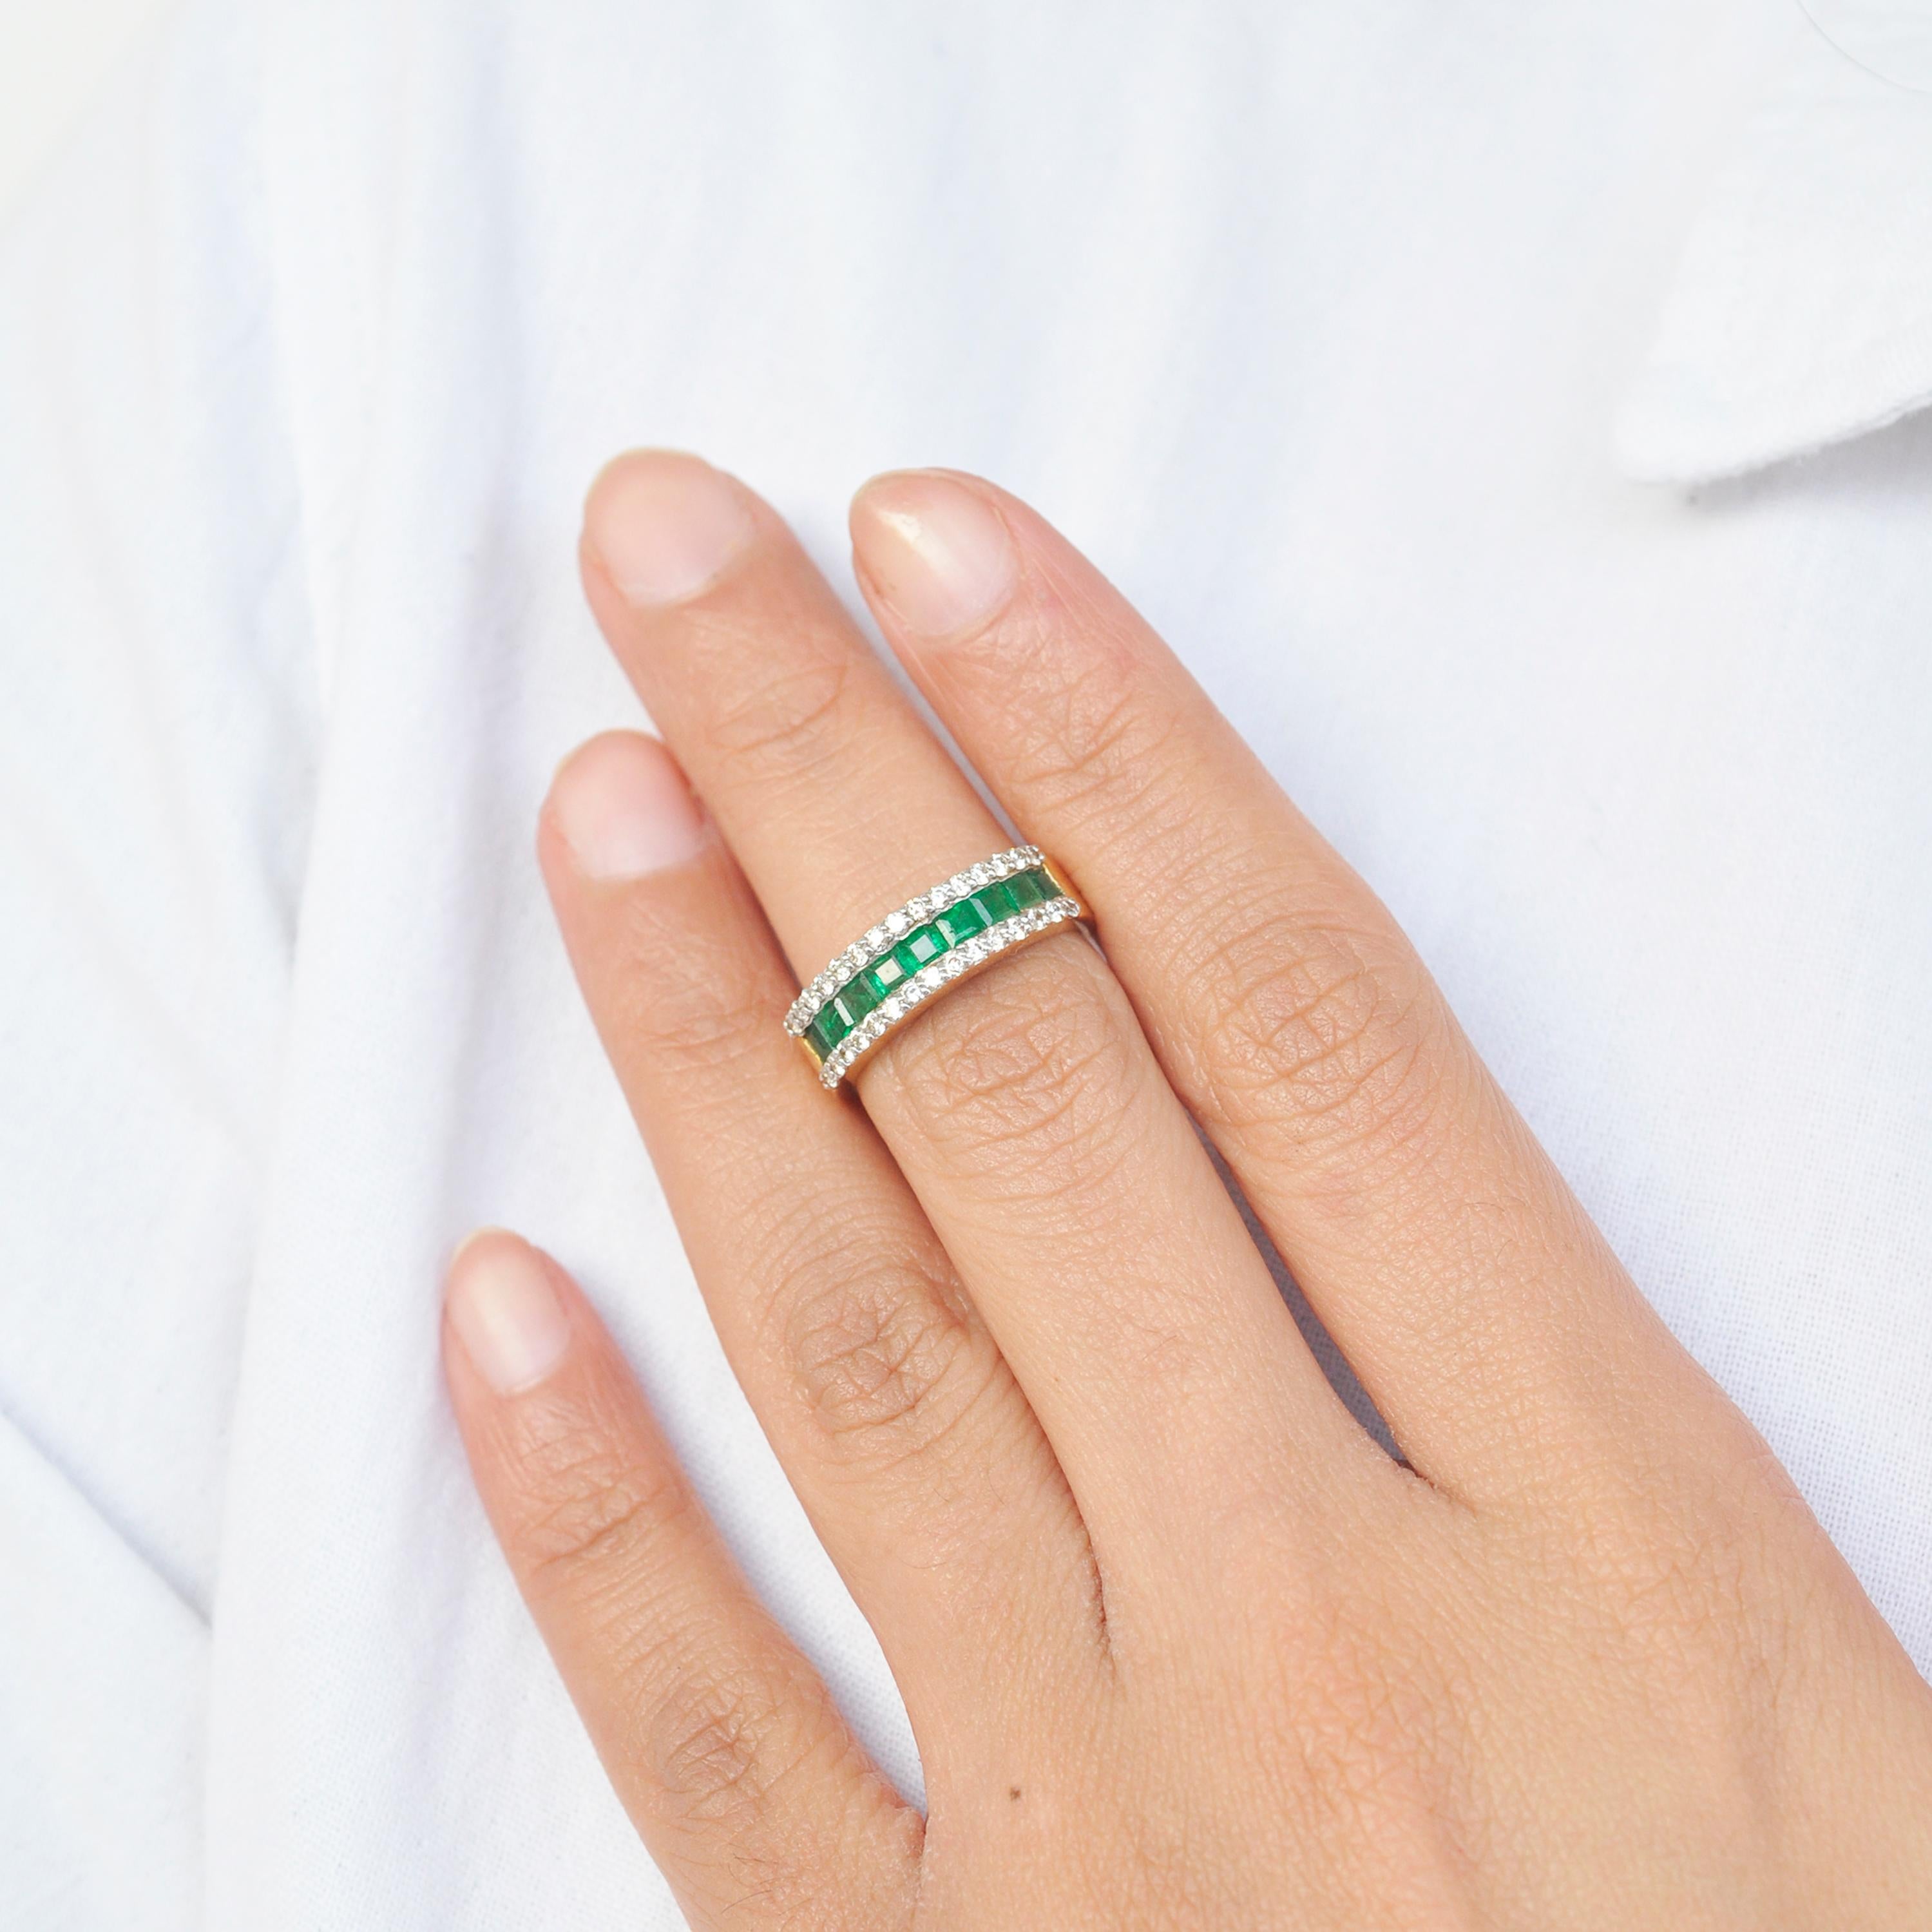 18 Karat Gold Kanal gesetzt Smaragd Schritt geschnitten Sandawana Smaragd Diamant lineare Band Ring.

Dieser wunderschöne lineare Bandring mit glänzenden Sandawana-Smaragden aus Simbabwe ist äußerst spektakulär. Dieser Ring ist elegant und schick